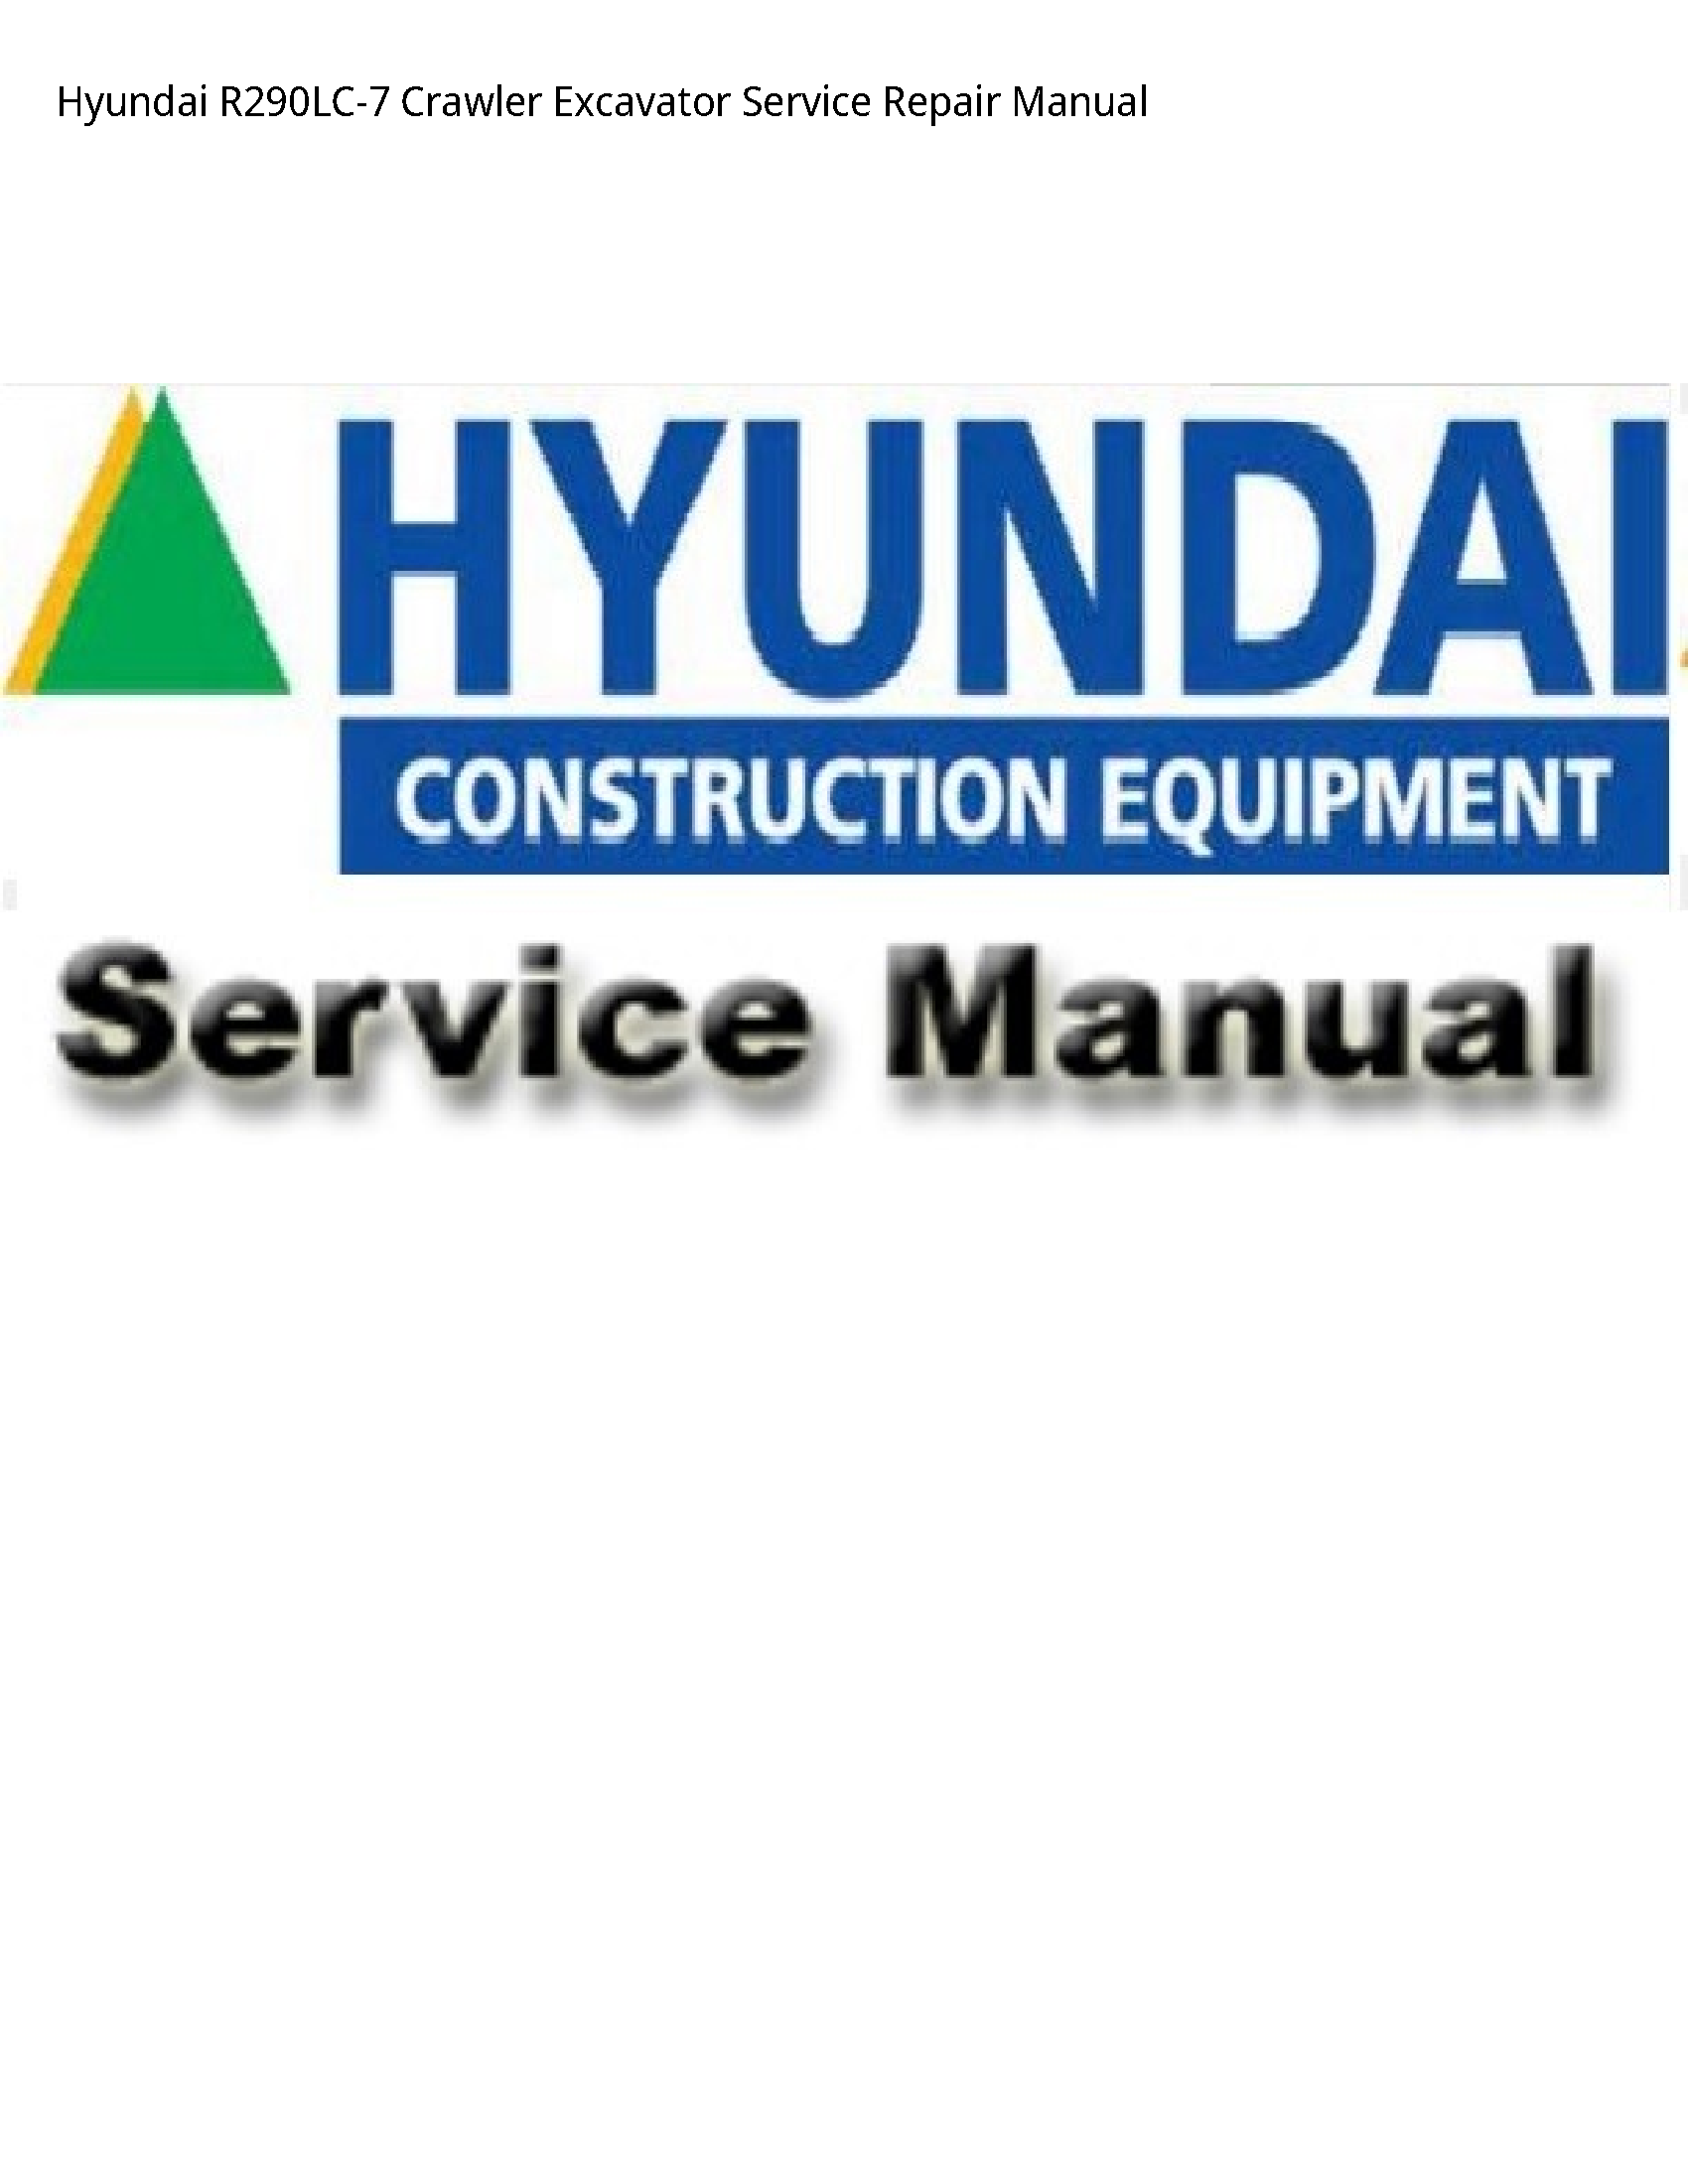 Hyundai R290LC-7 Crawler Excavator manual